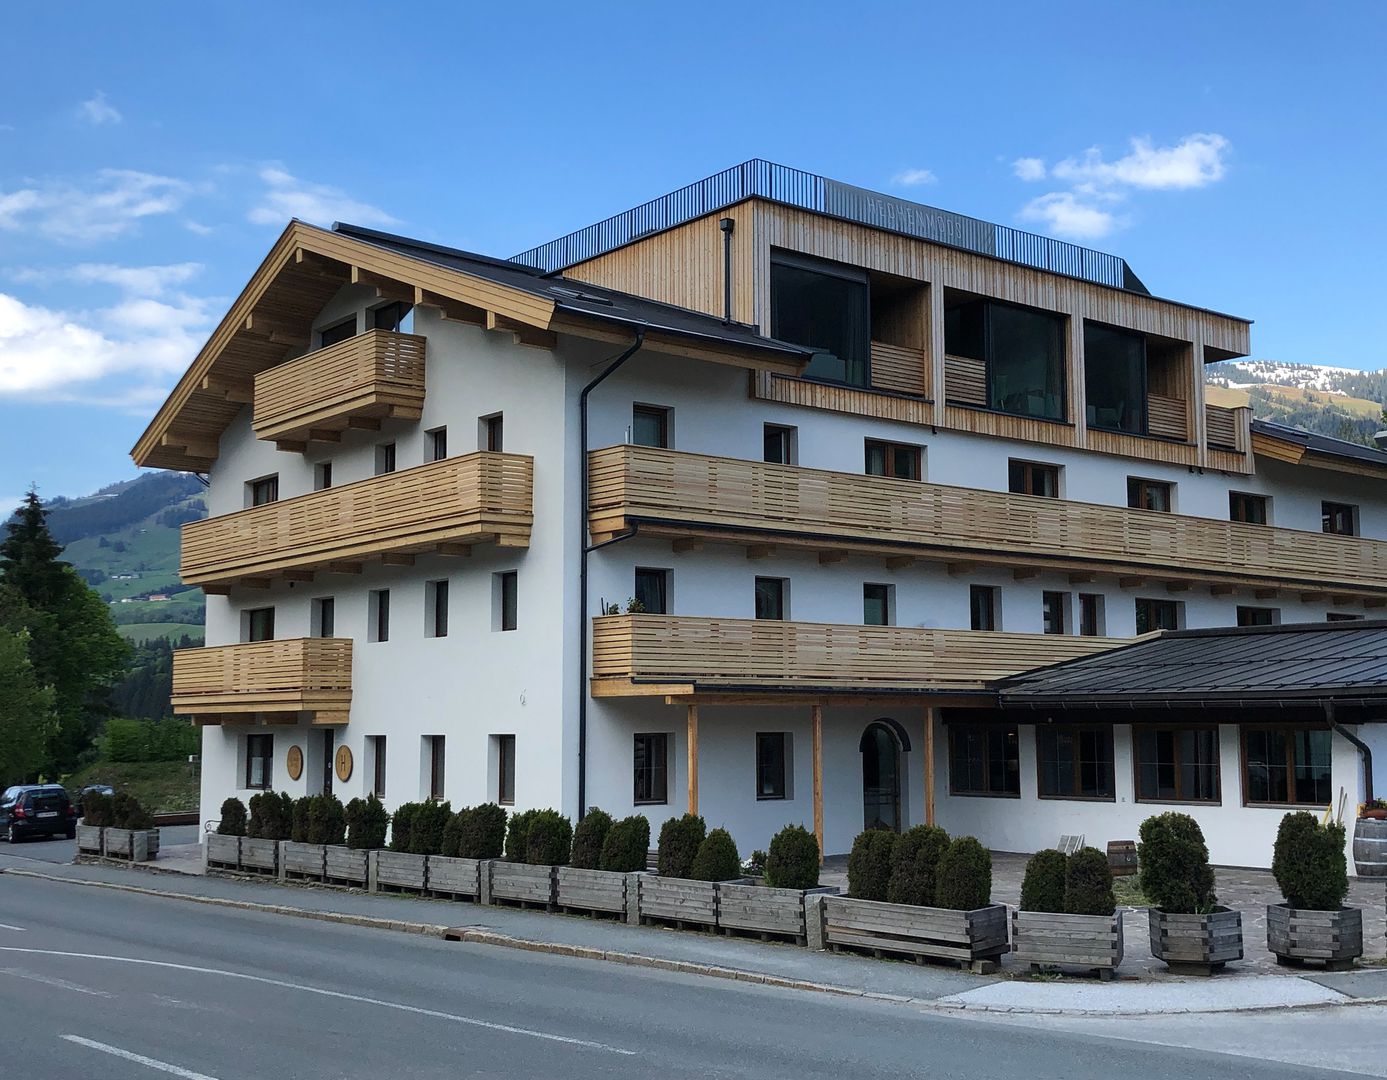 Das Lifesport Hotel Hechenmoos in Kitzbühel - Kirchberg, Das Lifesport Hotel Hechenmoos / Österreich